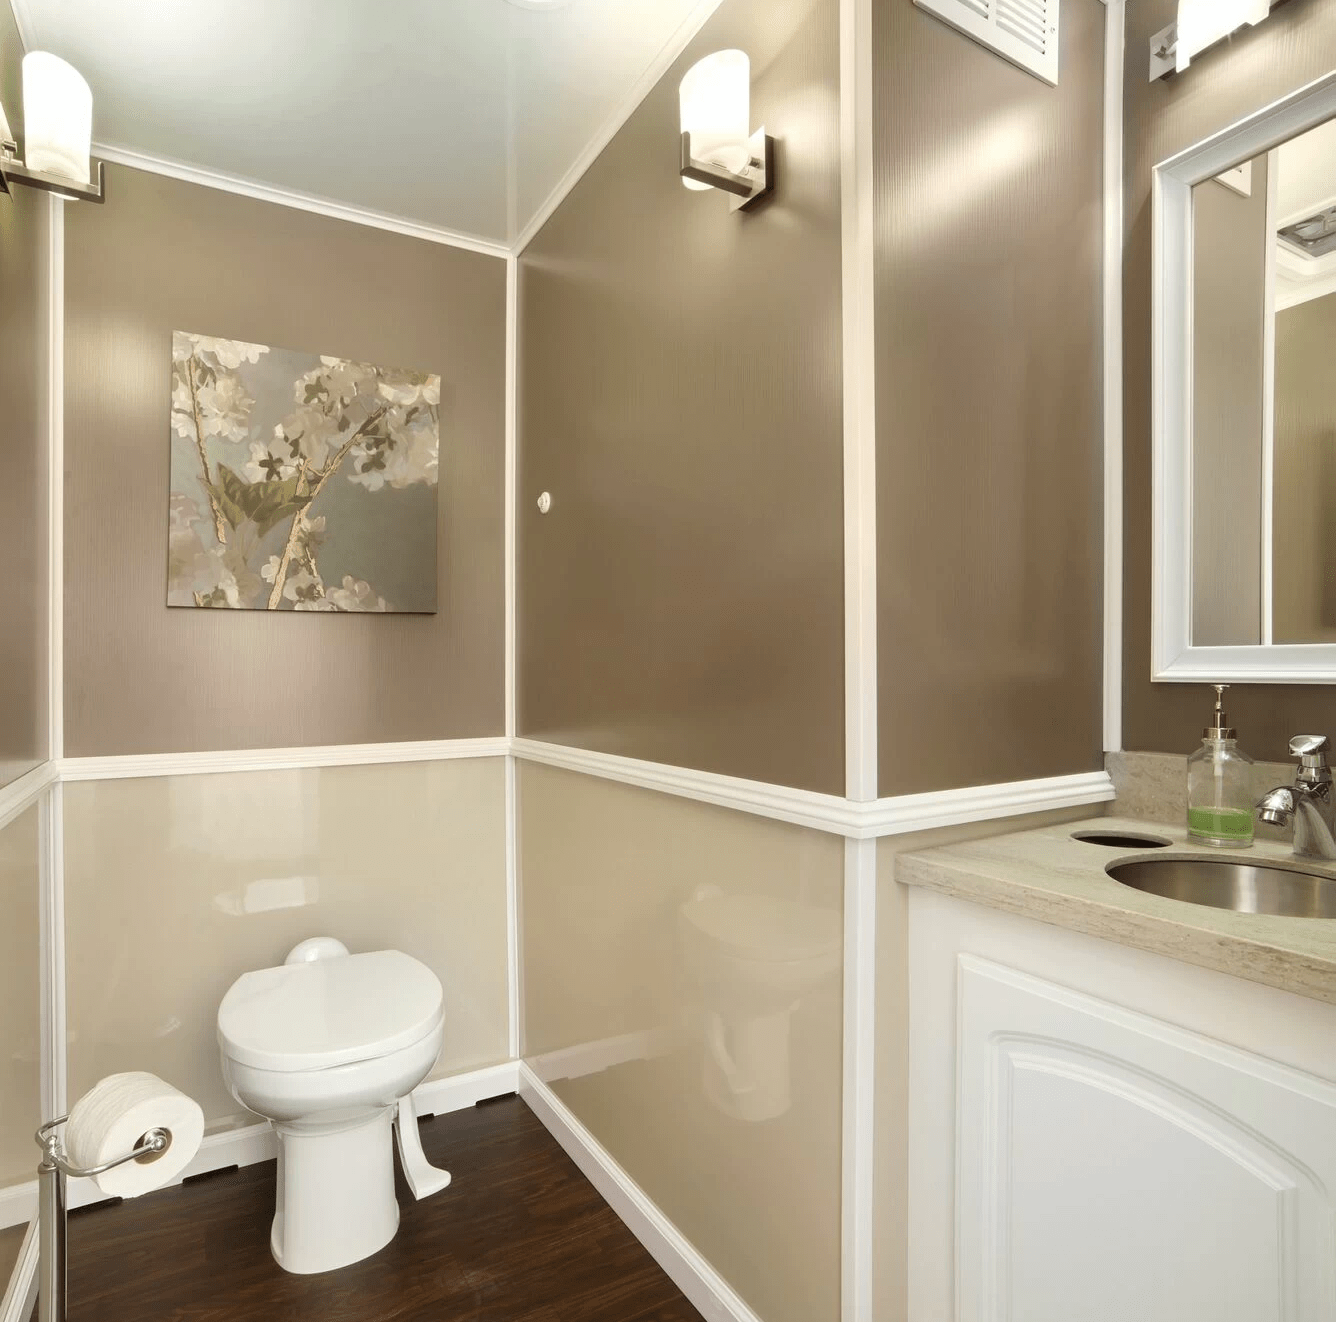 Interior of an executive luxury bathroom